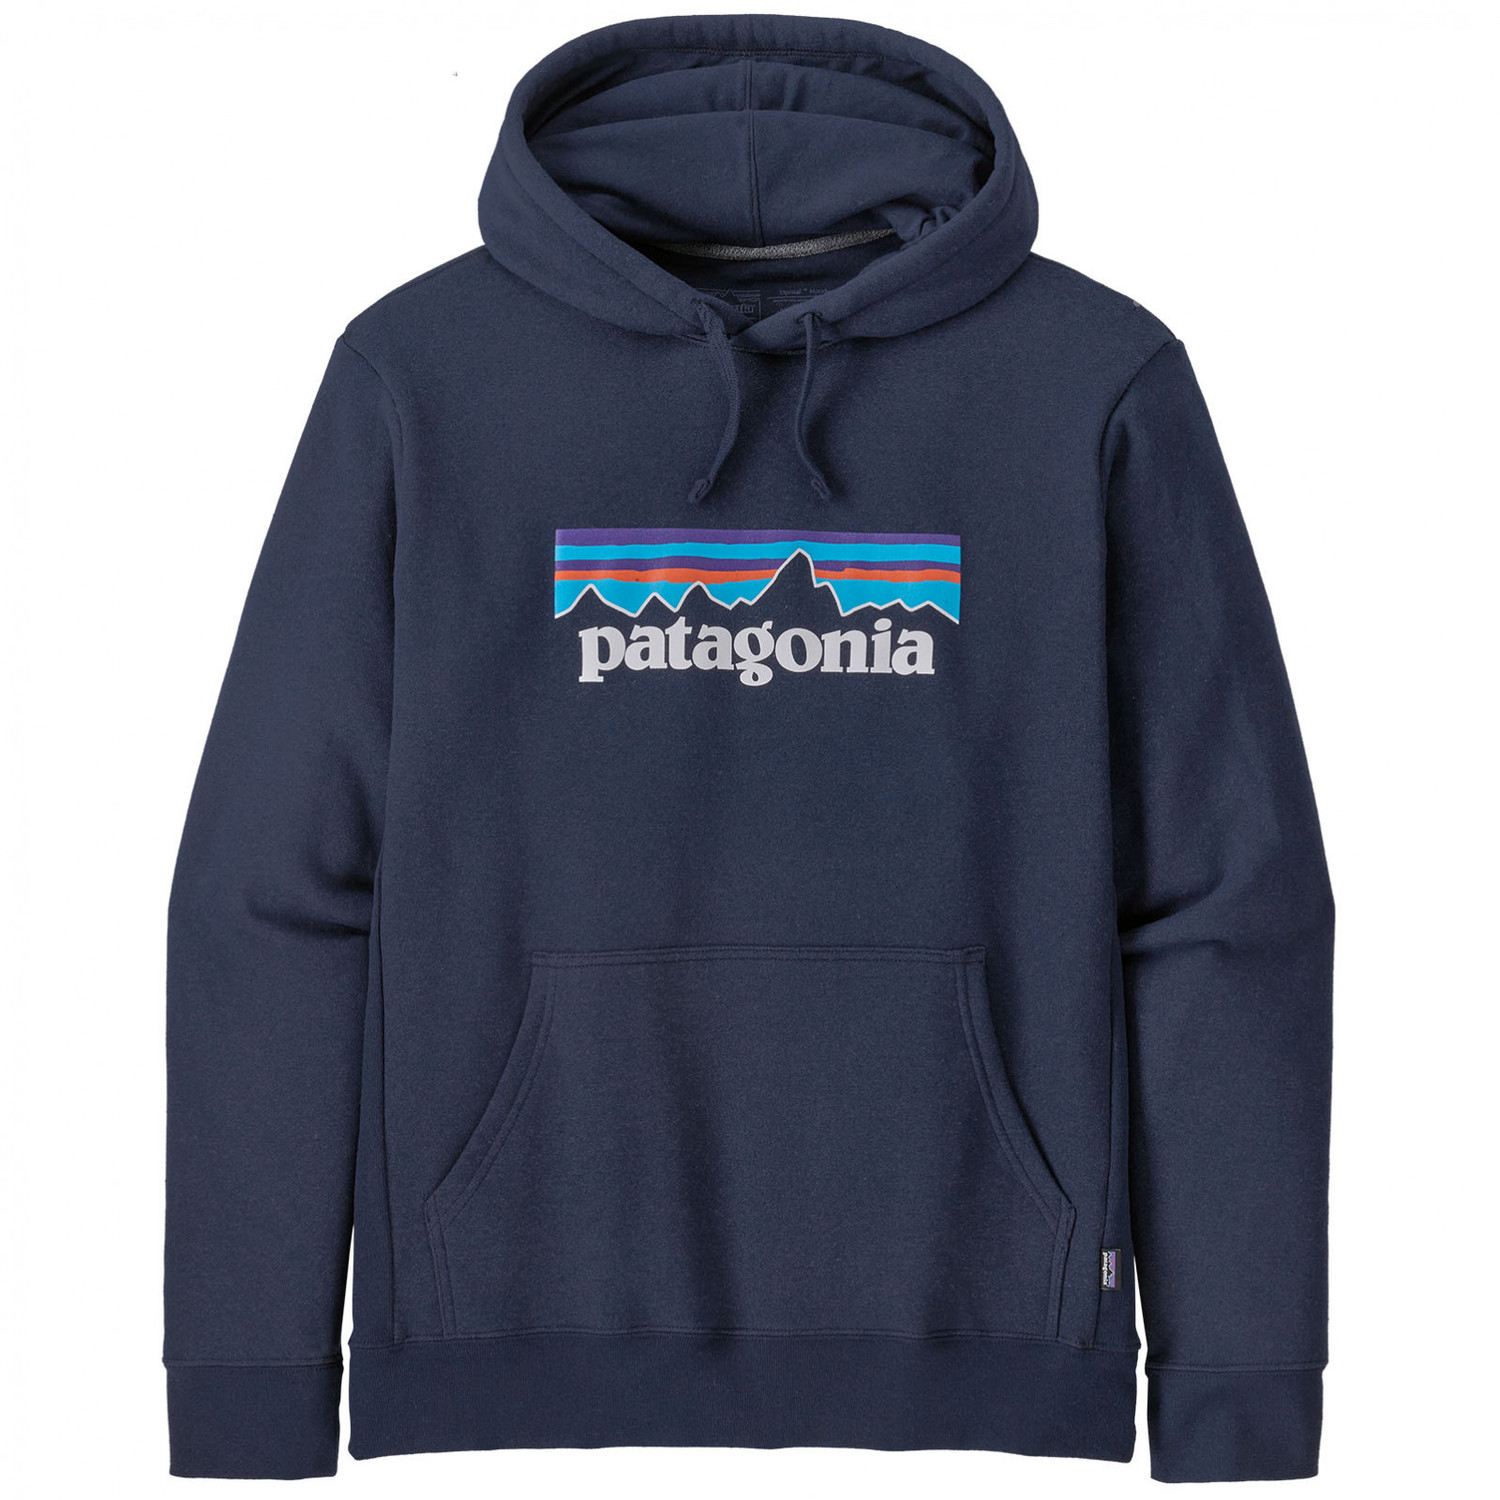 Mikina Patagonia P-6 Logo Uprisal Hoody Velikost: S / Barva: tmavě modrá